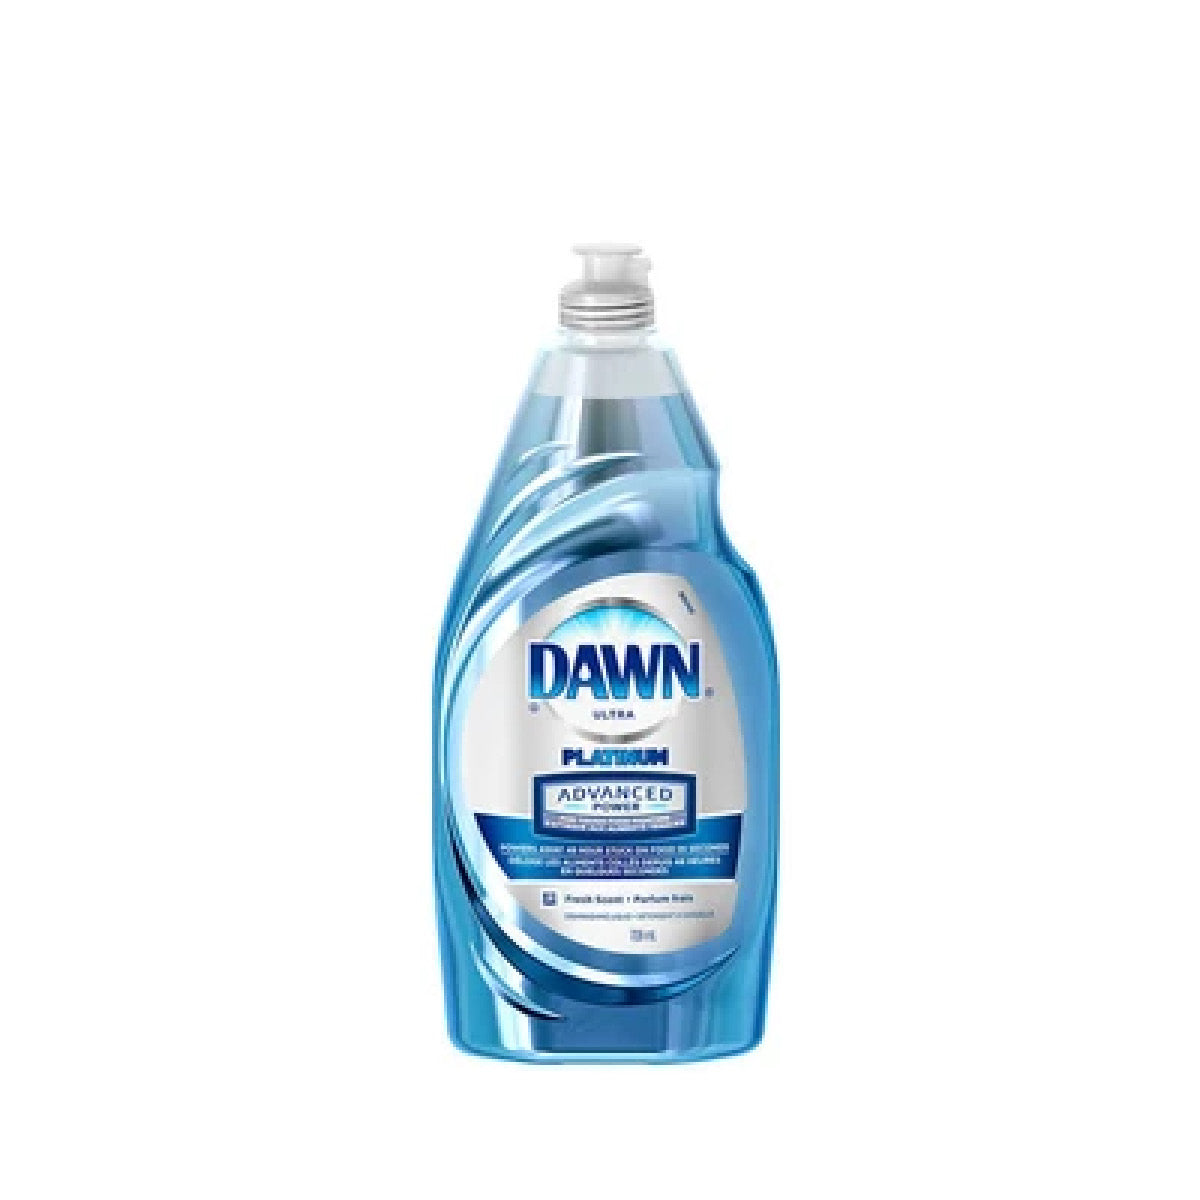 Dawn Ultra Platinum Advanced Power Dish Soap, Fresh Scent, 709ml